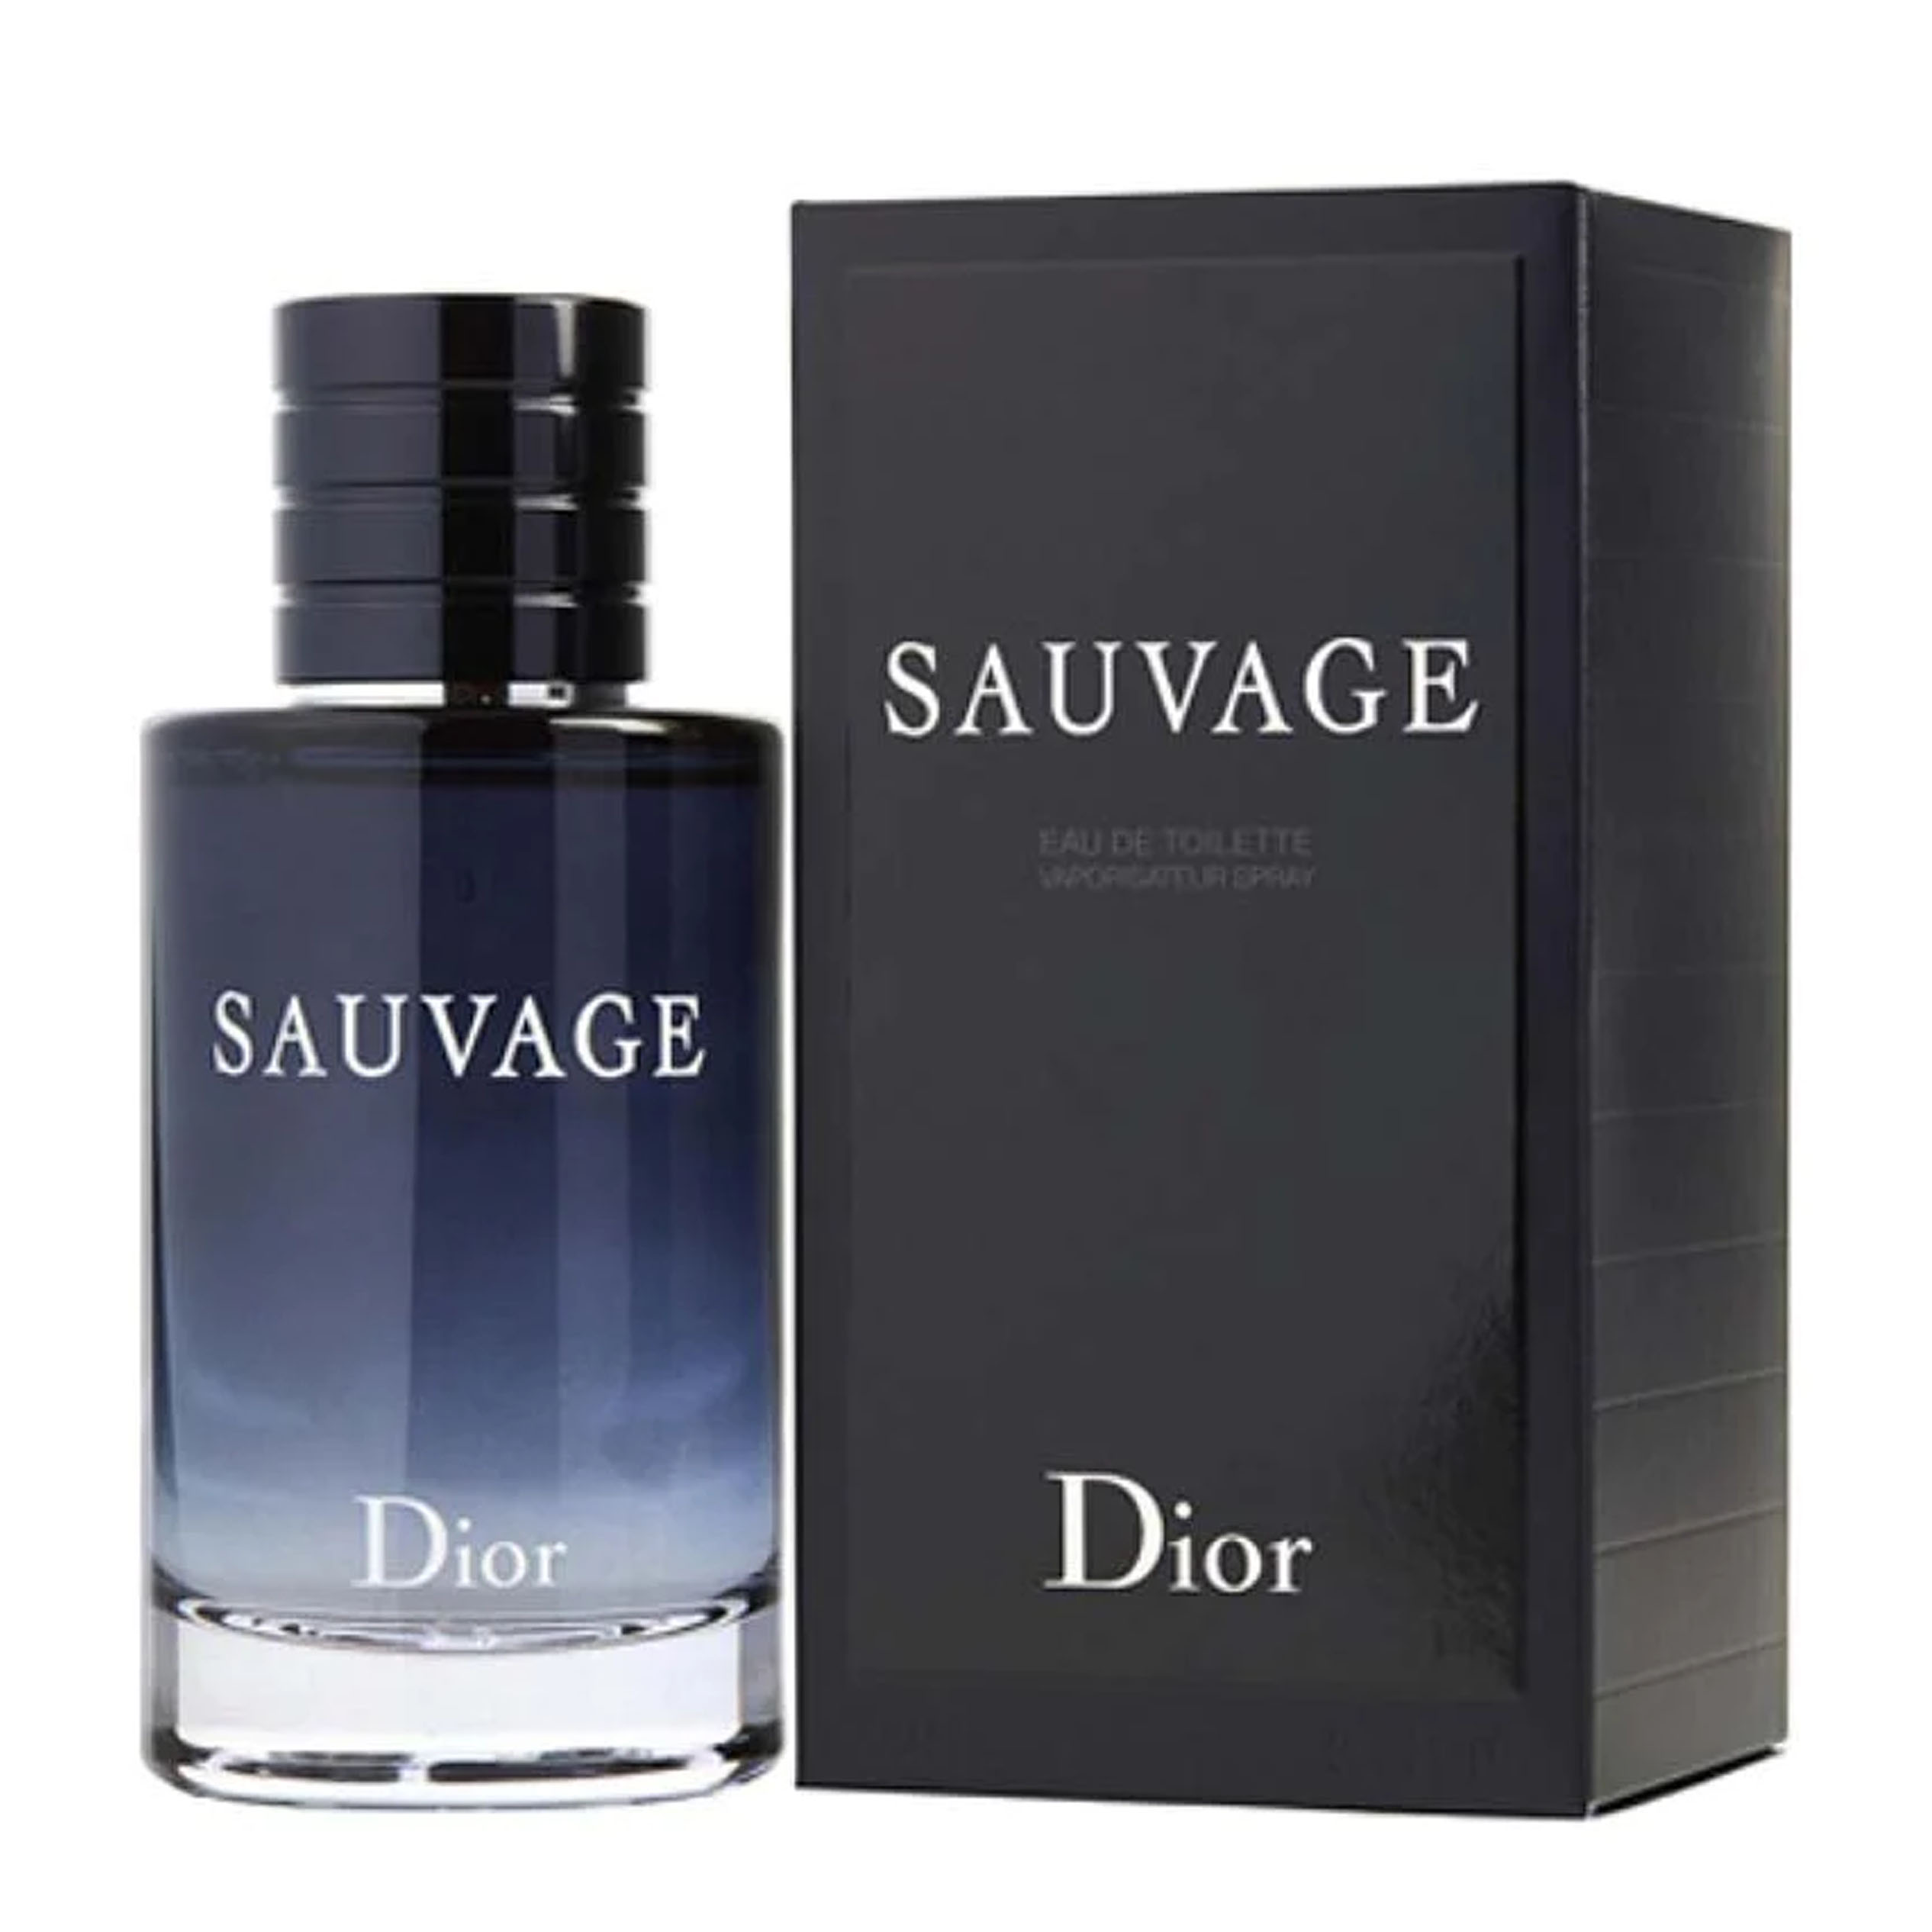 Perfume Sauvage Dior  (Replica Con Fragancia Importada)- Hombre